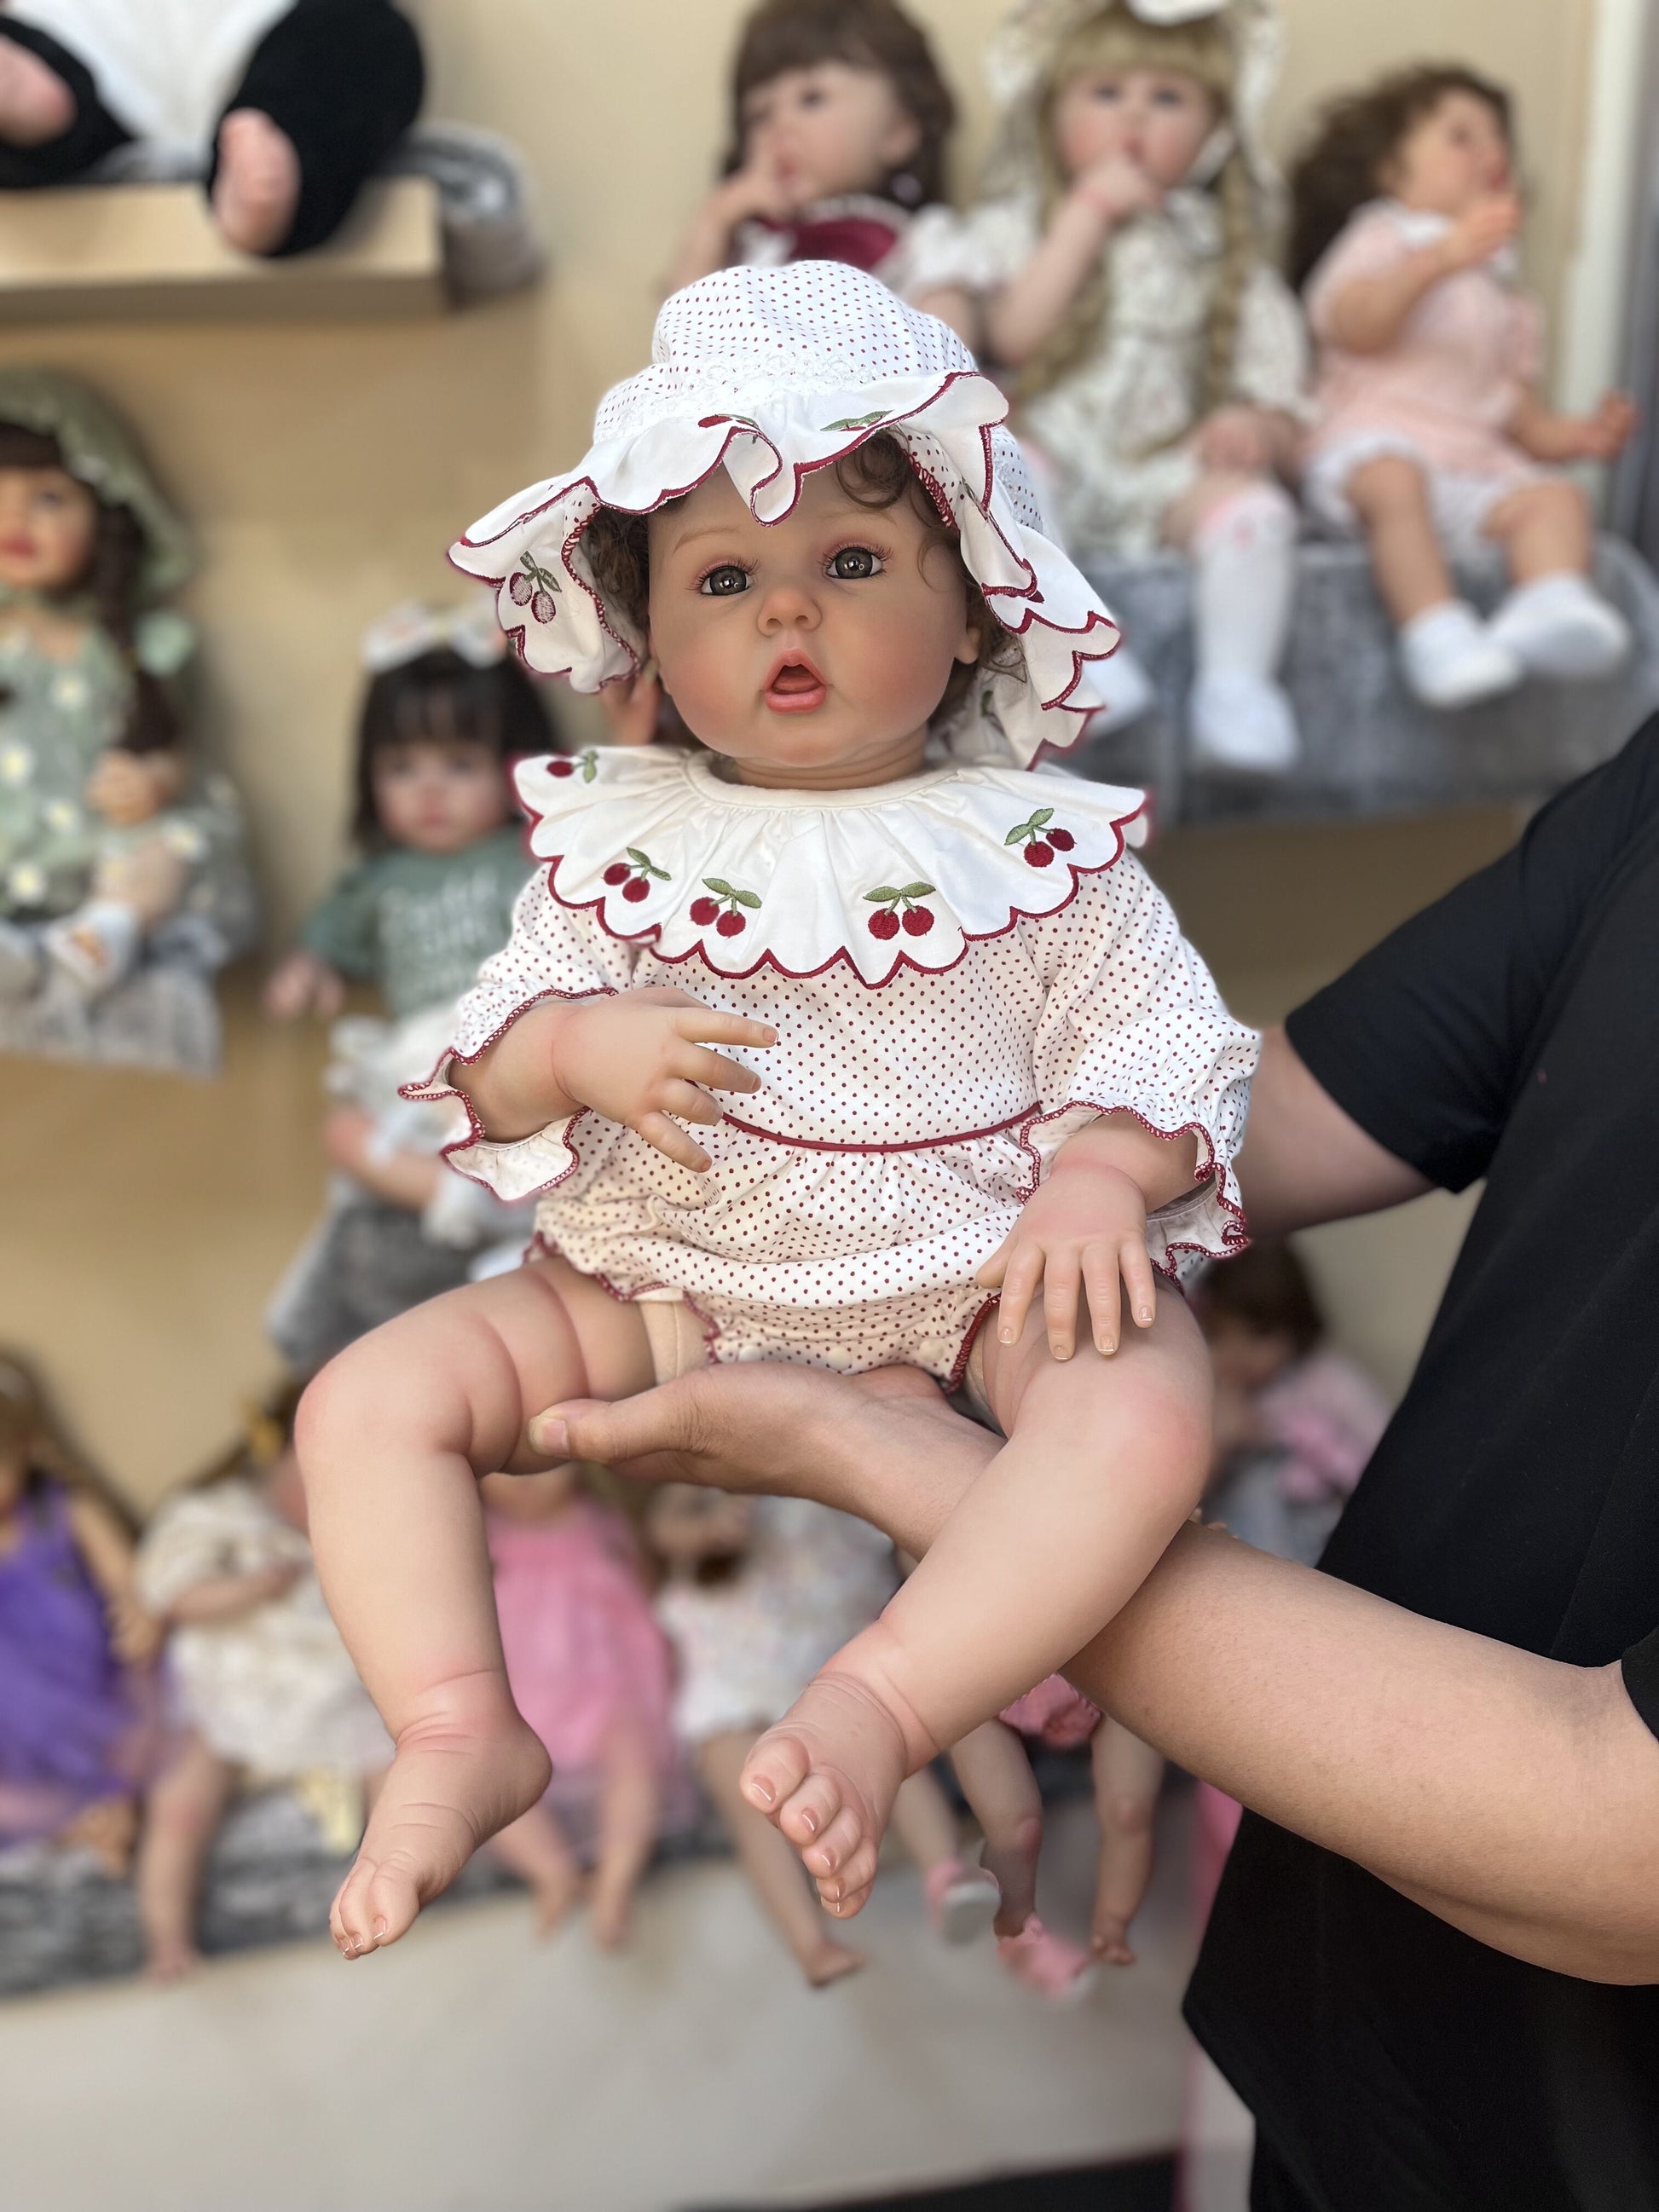 ❤️Original Size❤️ 23 Inches Bebe Reborn Doll Kit Juliana Blank